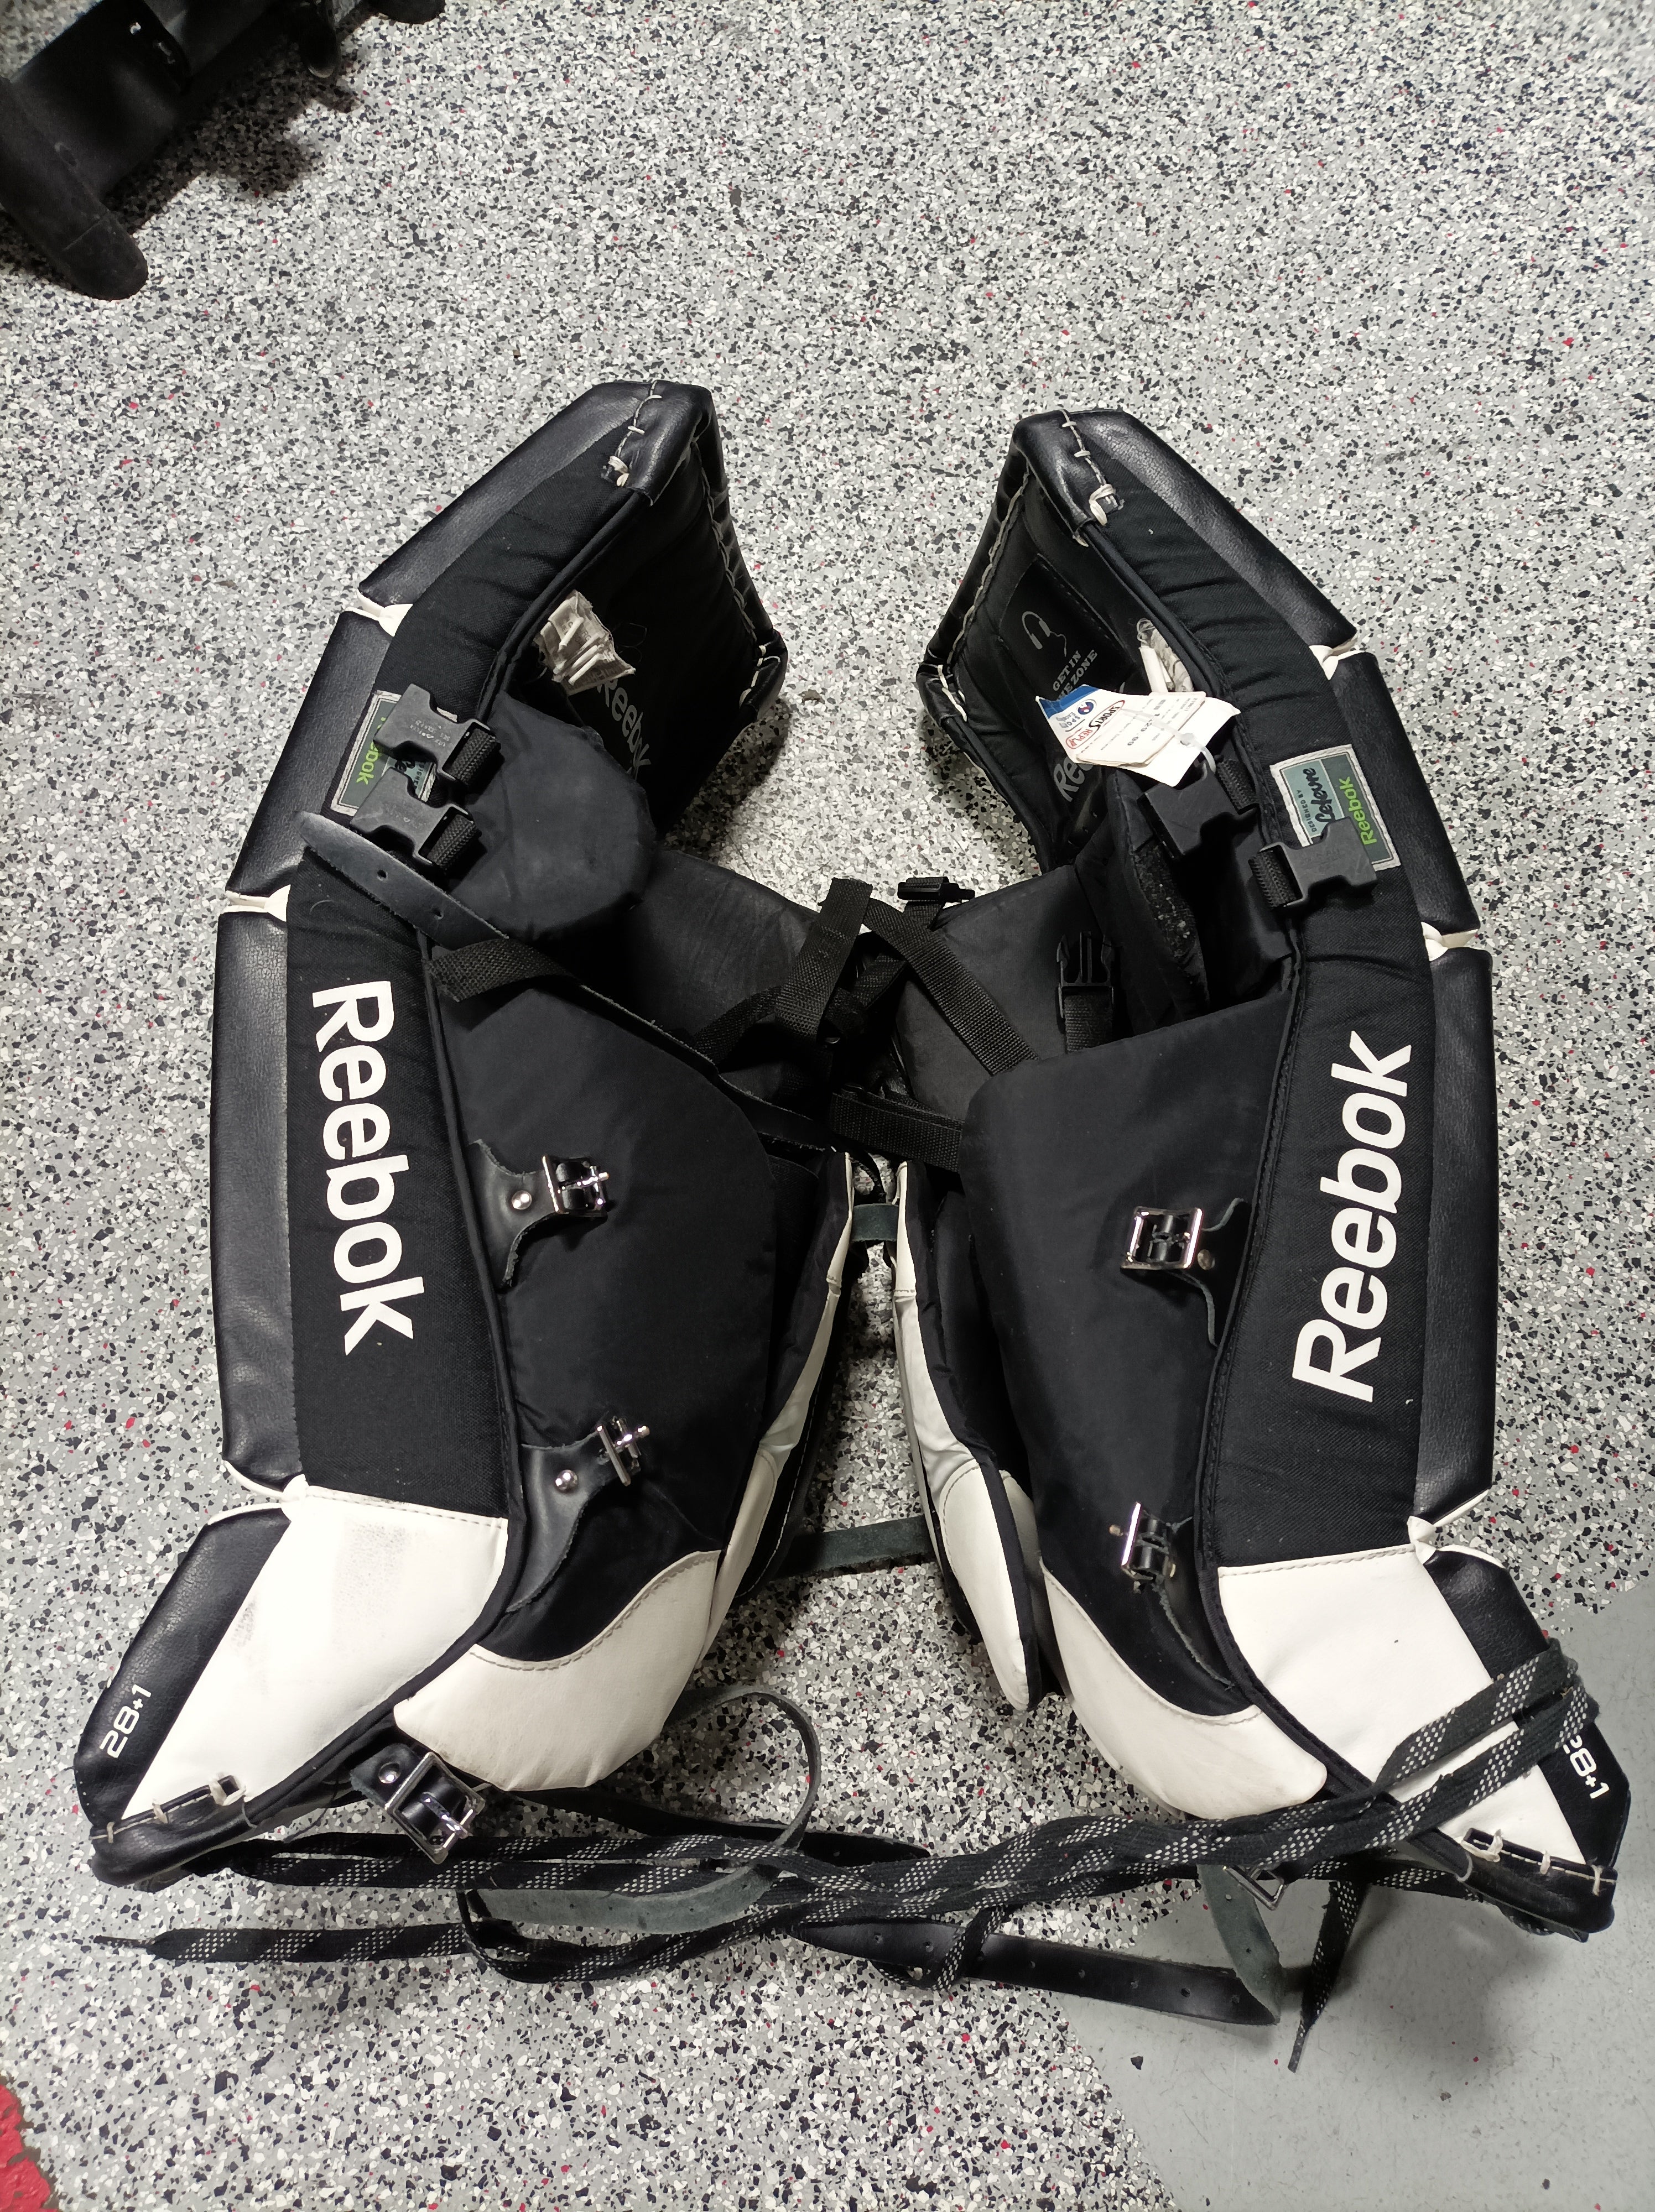 Reebok 7000 GOALIE Hockey Pads Sz 28" Blk/Wht-Reebok-Sports Replay - Sports Excellence